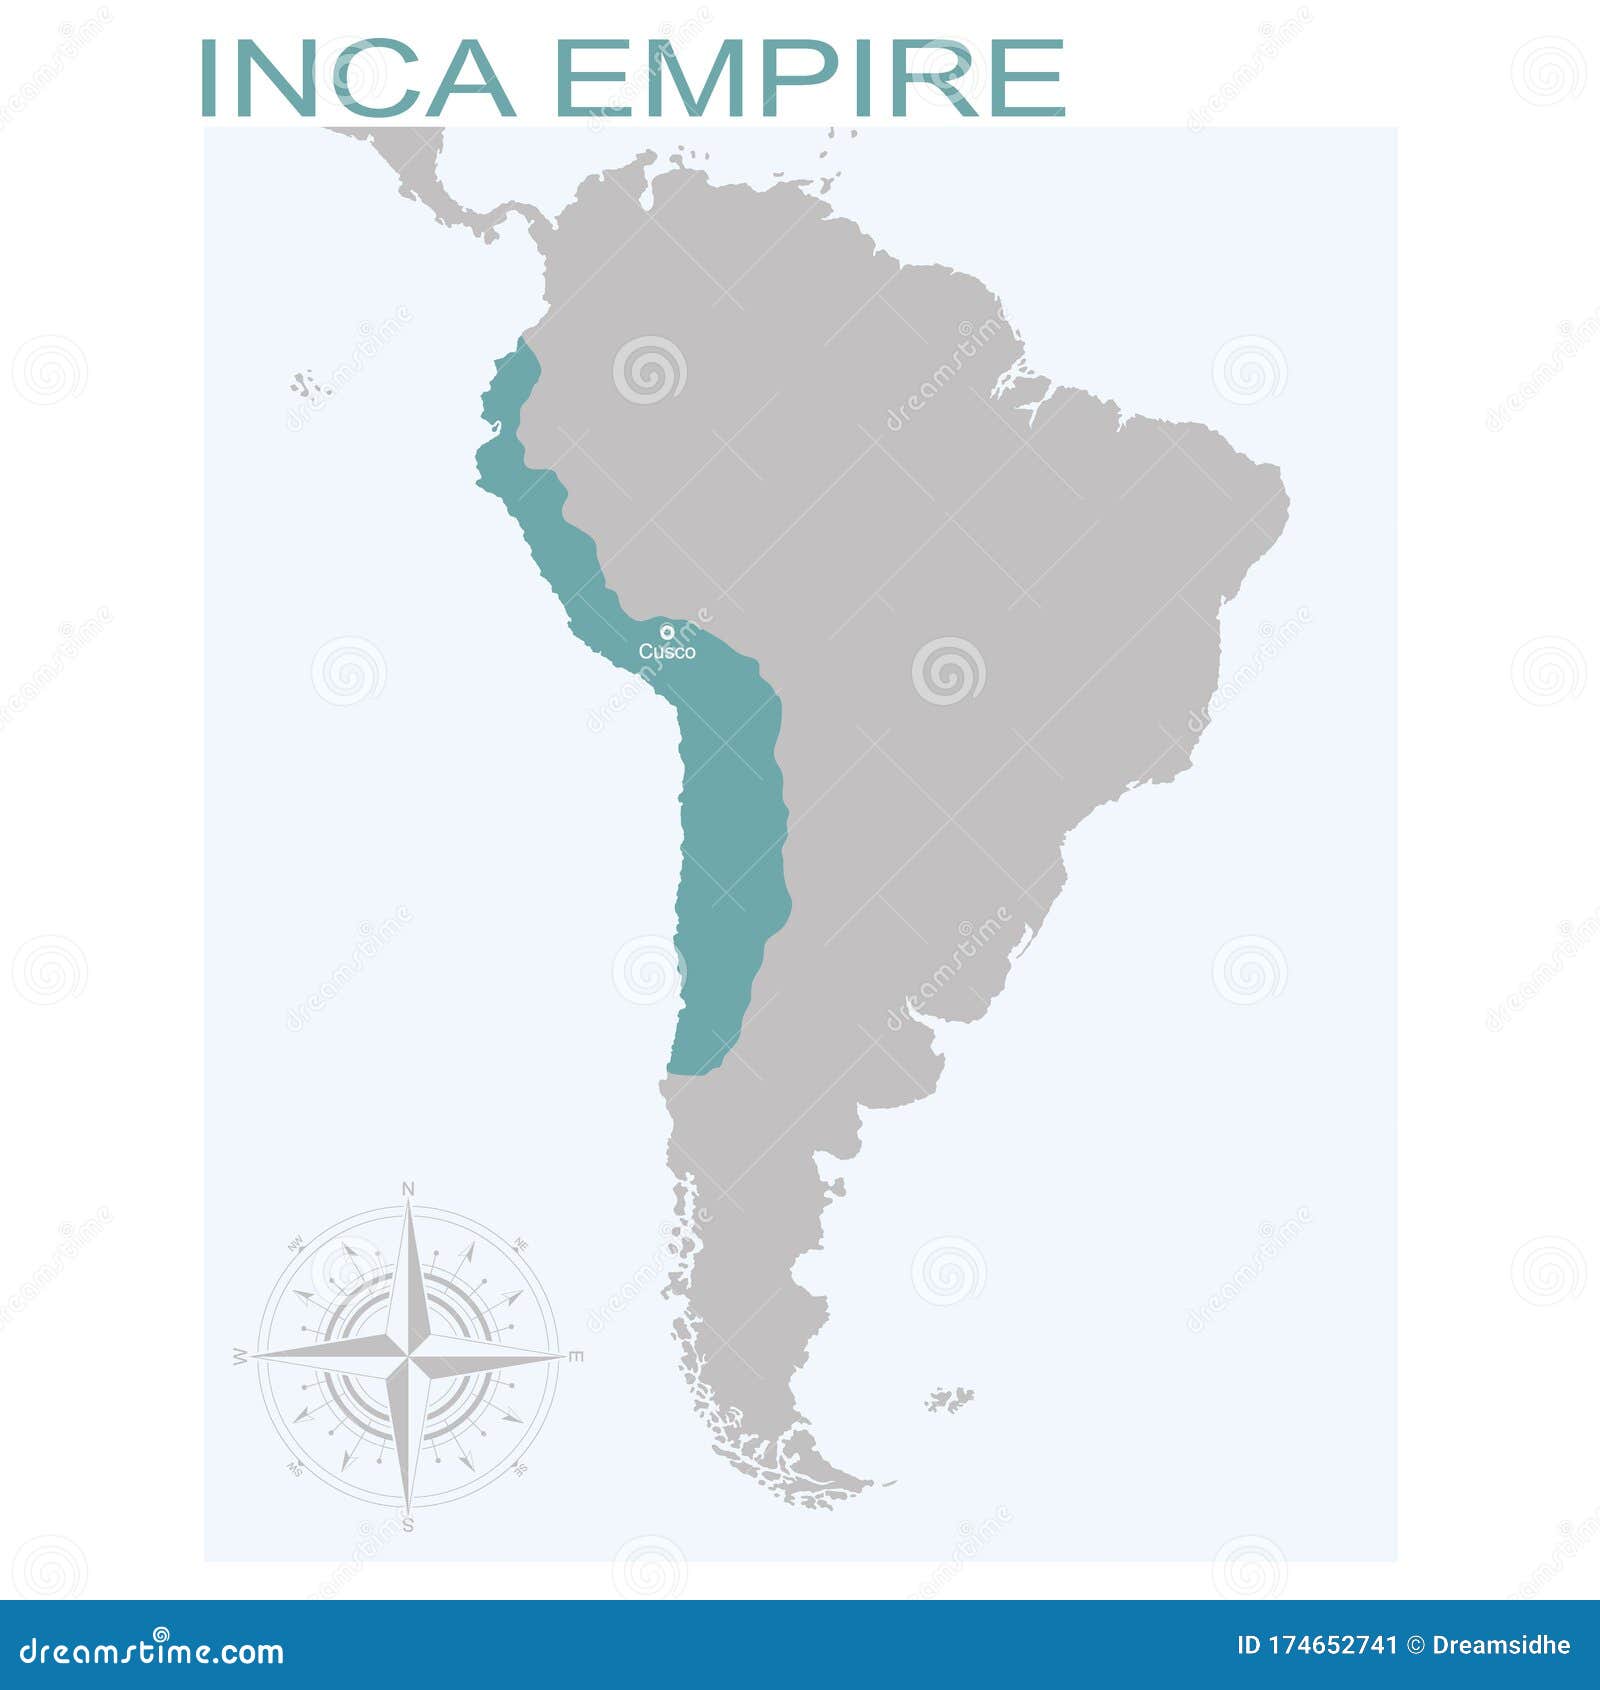  map of the inca empire